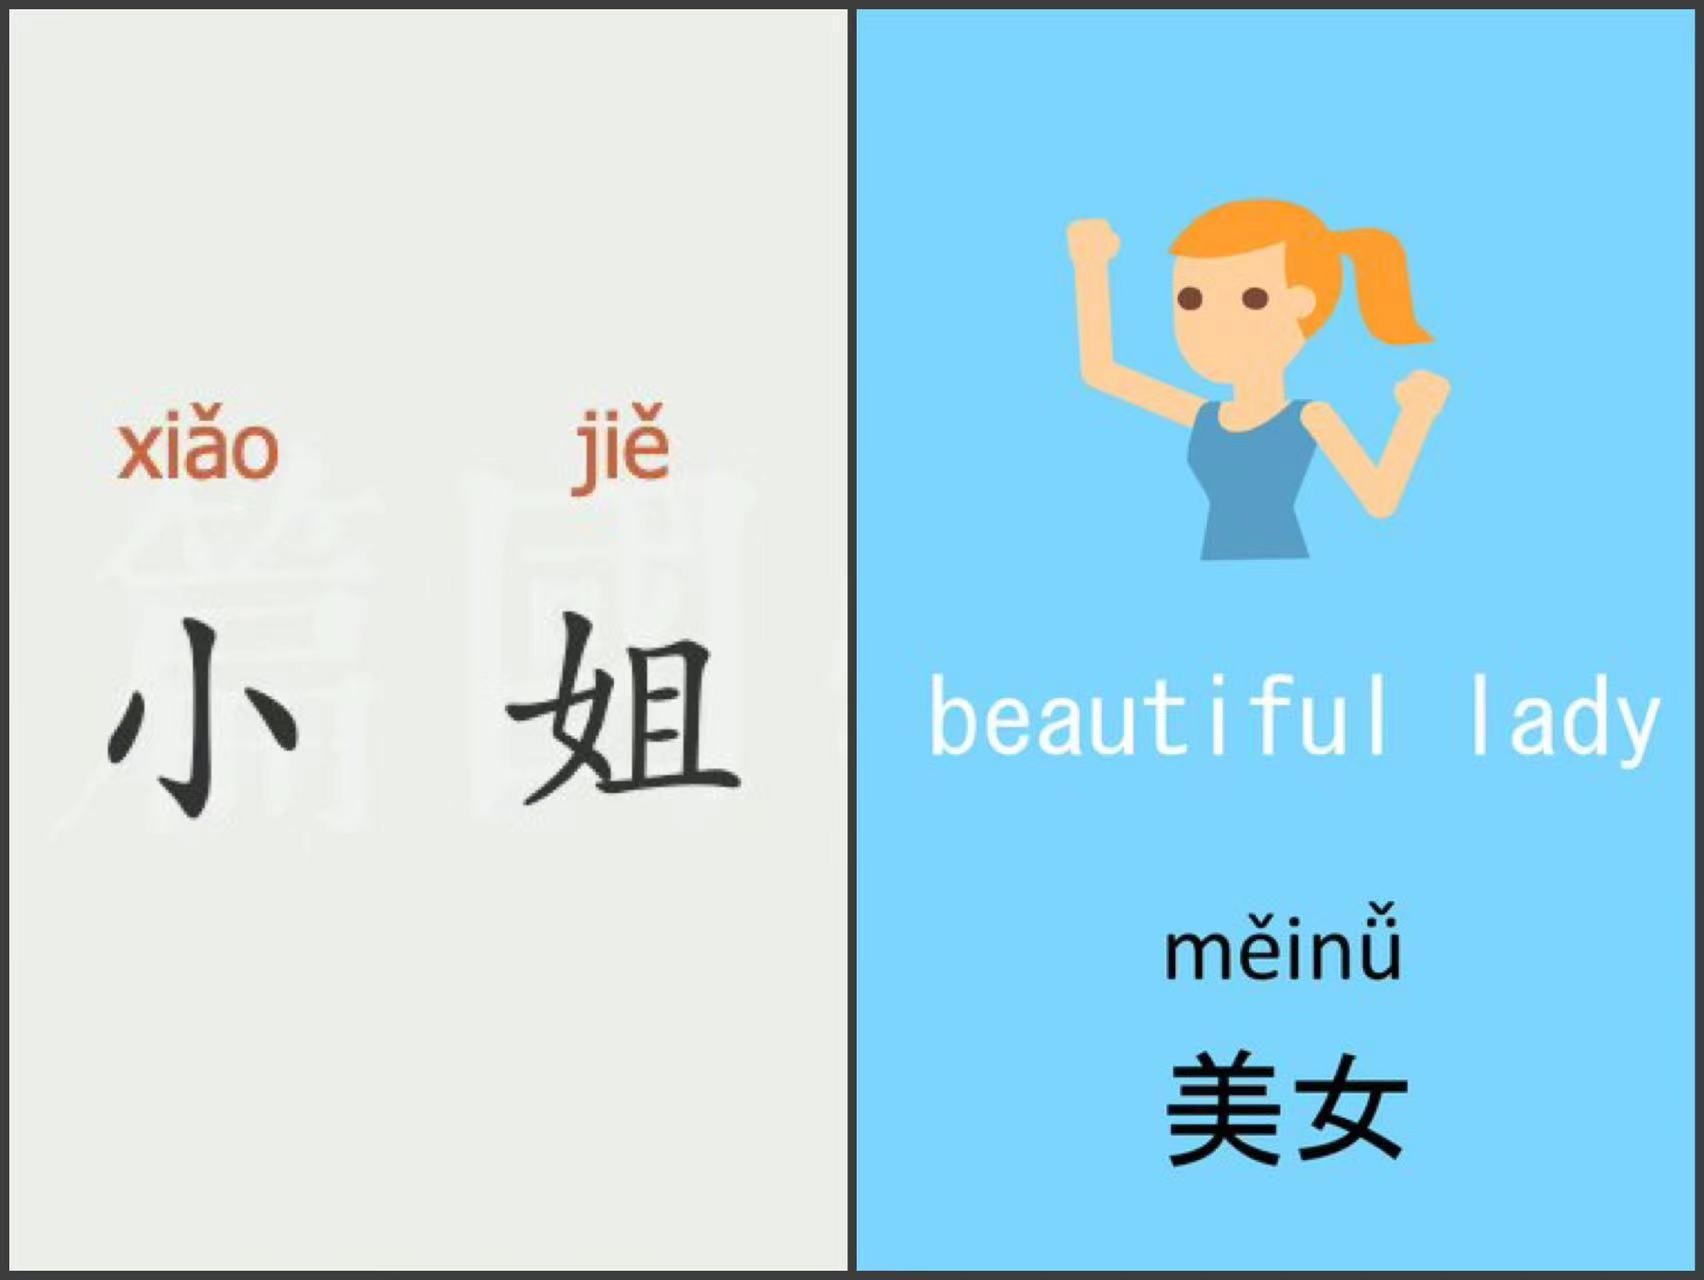 Kim YoungAh's favourite phrases in Chinese: 小姐 [xiǎojiě] and 美女 [měinǚ].